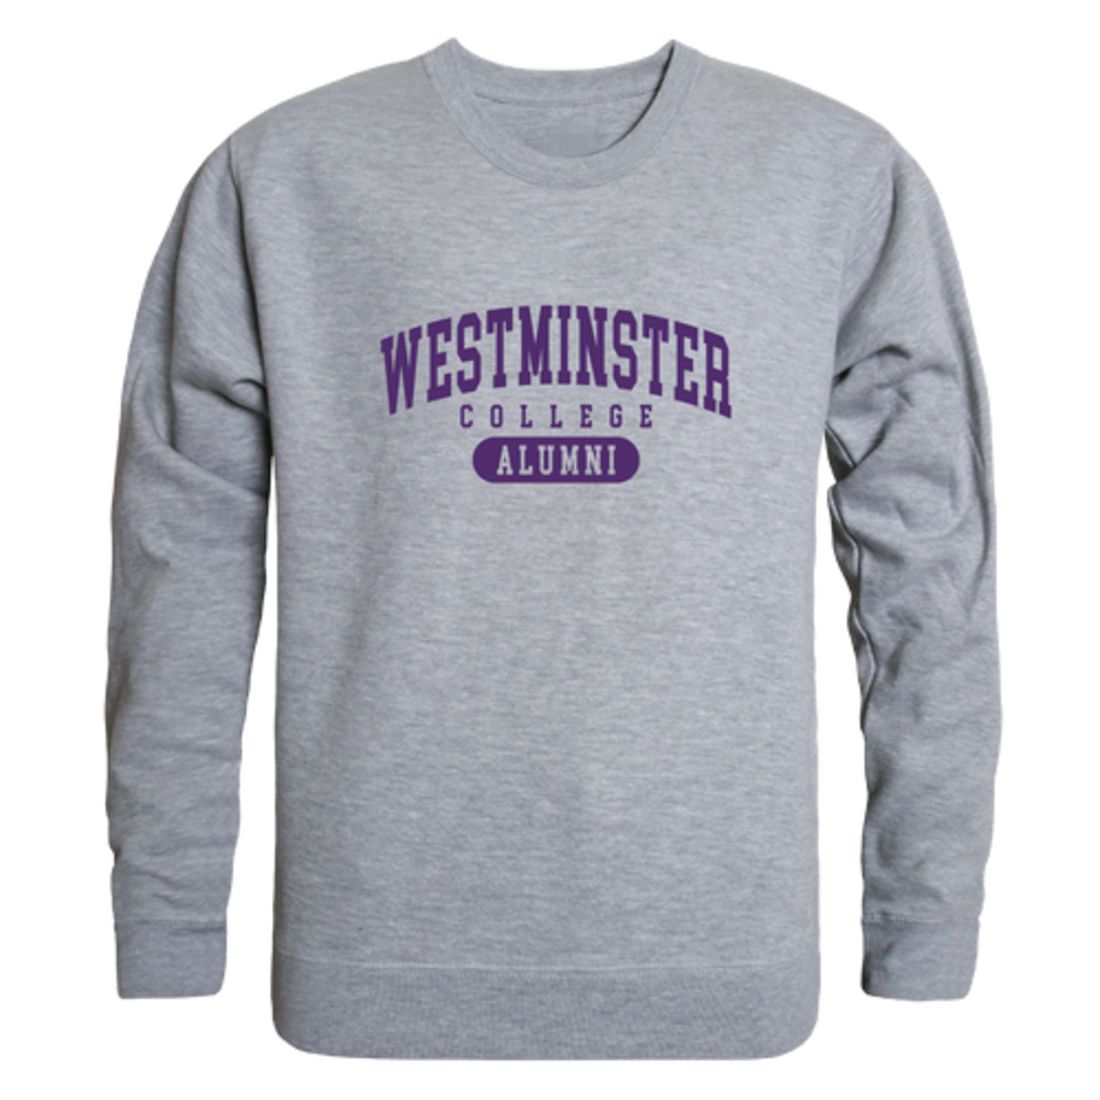 Westminster College Griffins Alumni Fleece Crewneck Pullover Sweatshirt Heather Charcoal-Campus-Wardrobe